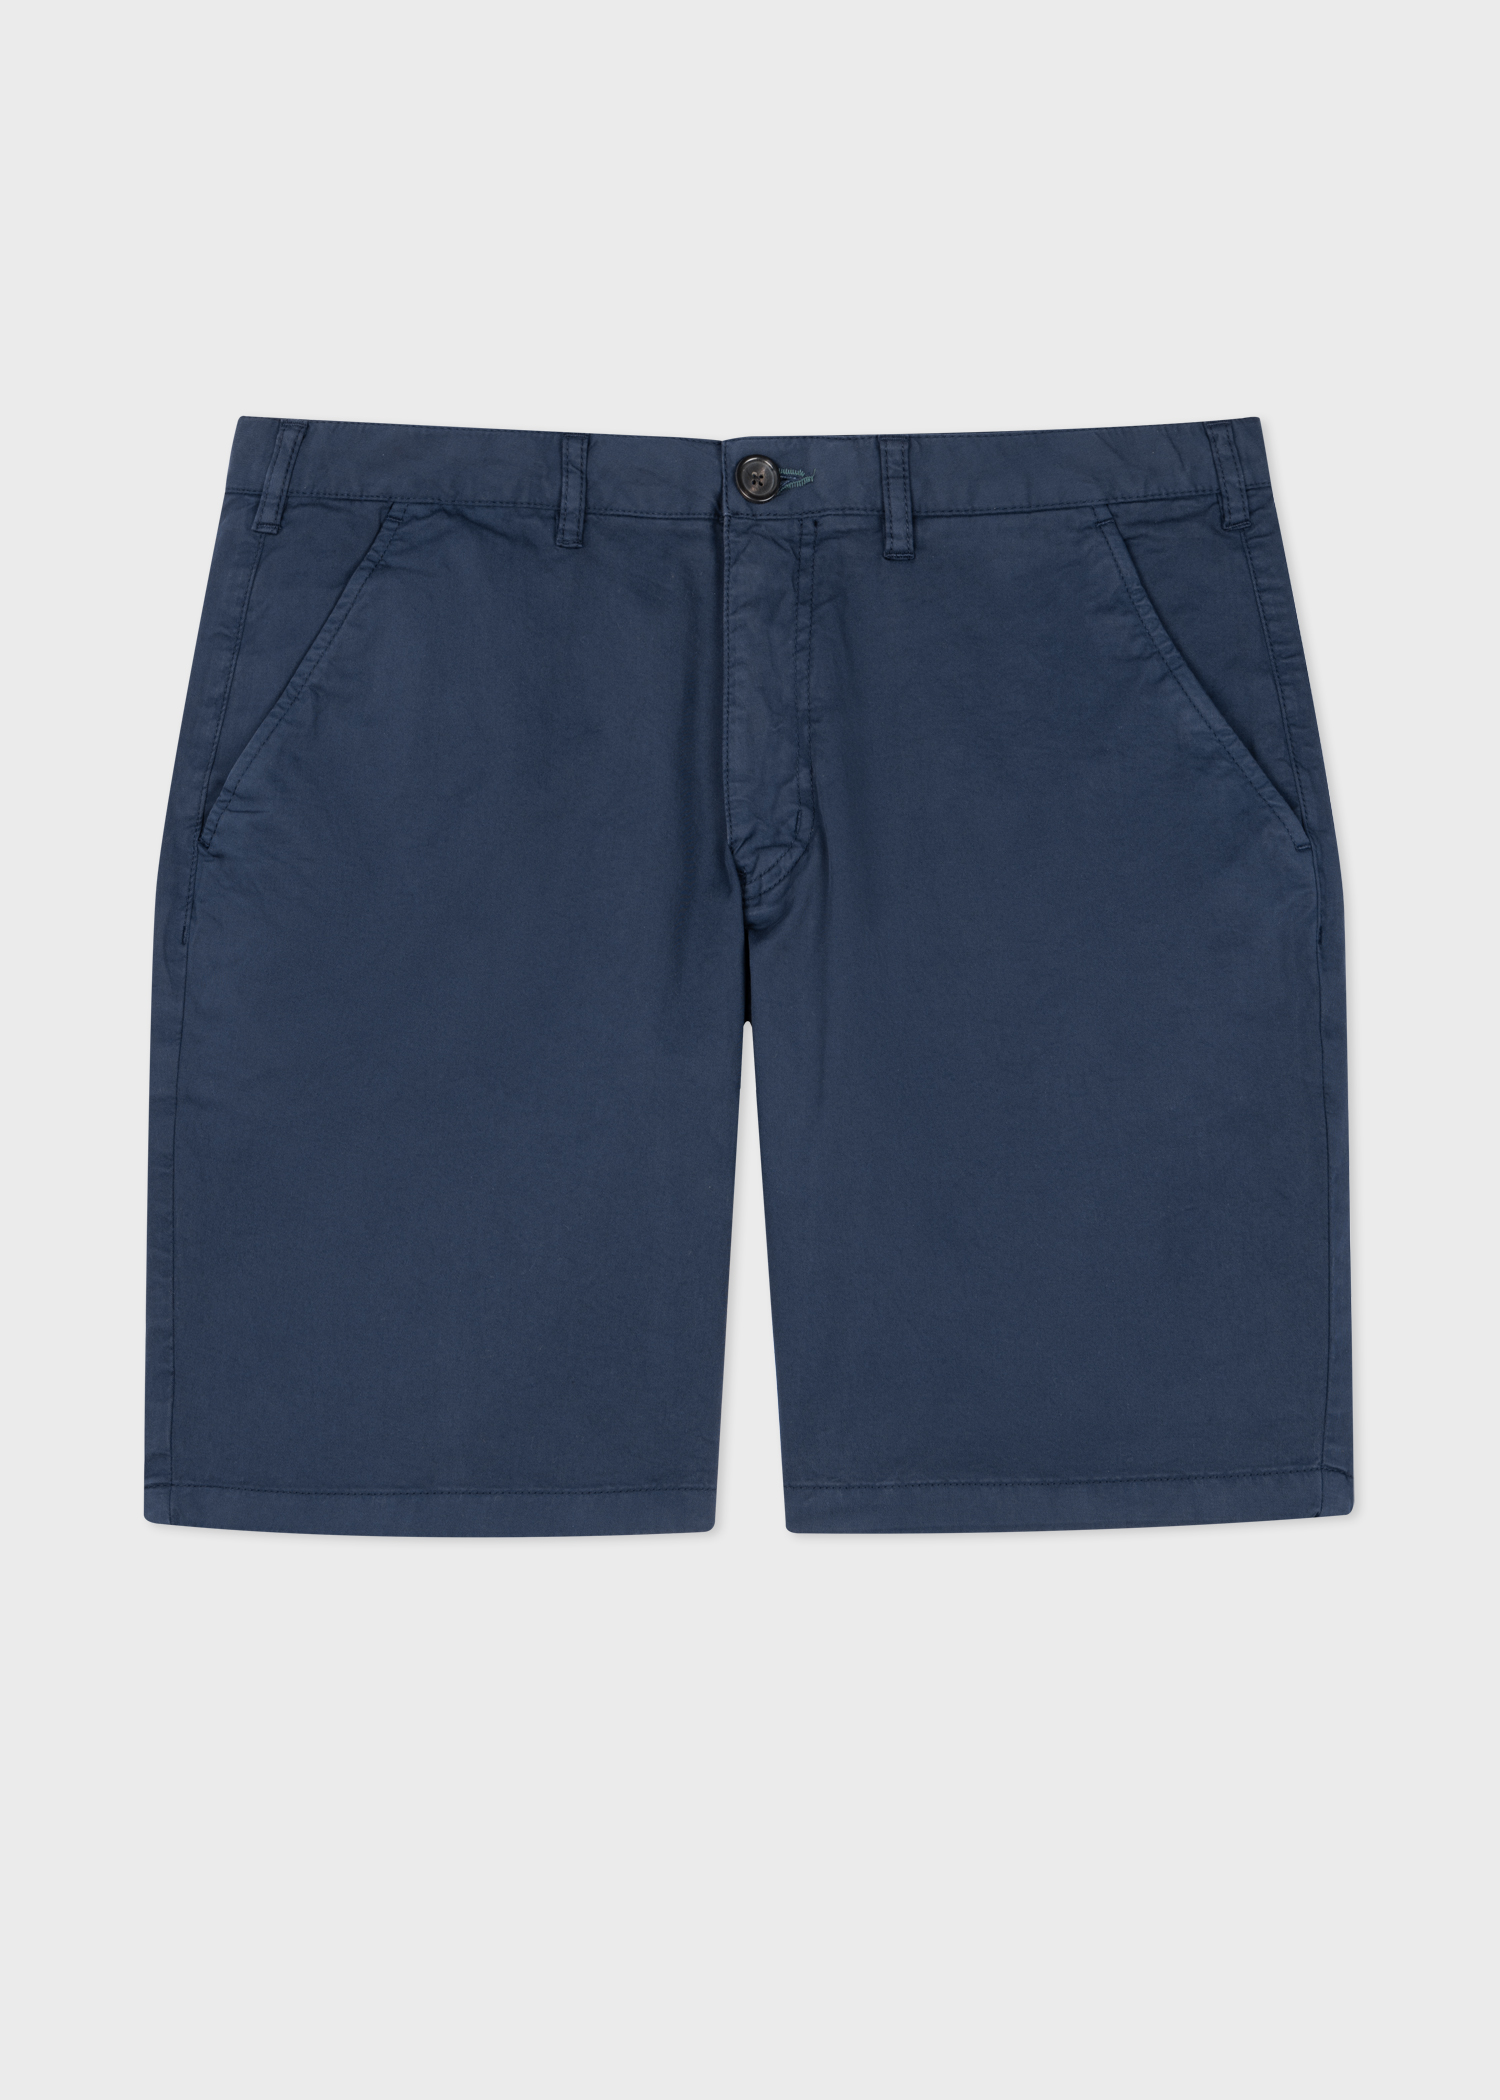 Men's Dark Navy Garment-Dyed Stretch Pima-Cotton Shorts